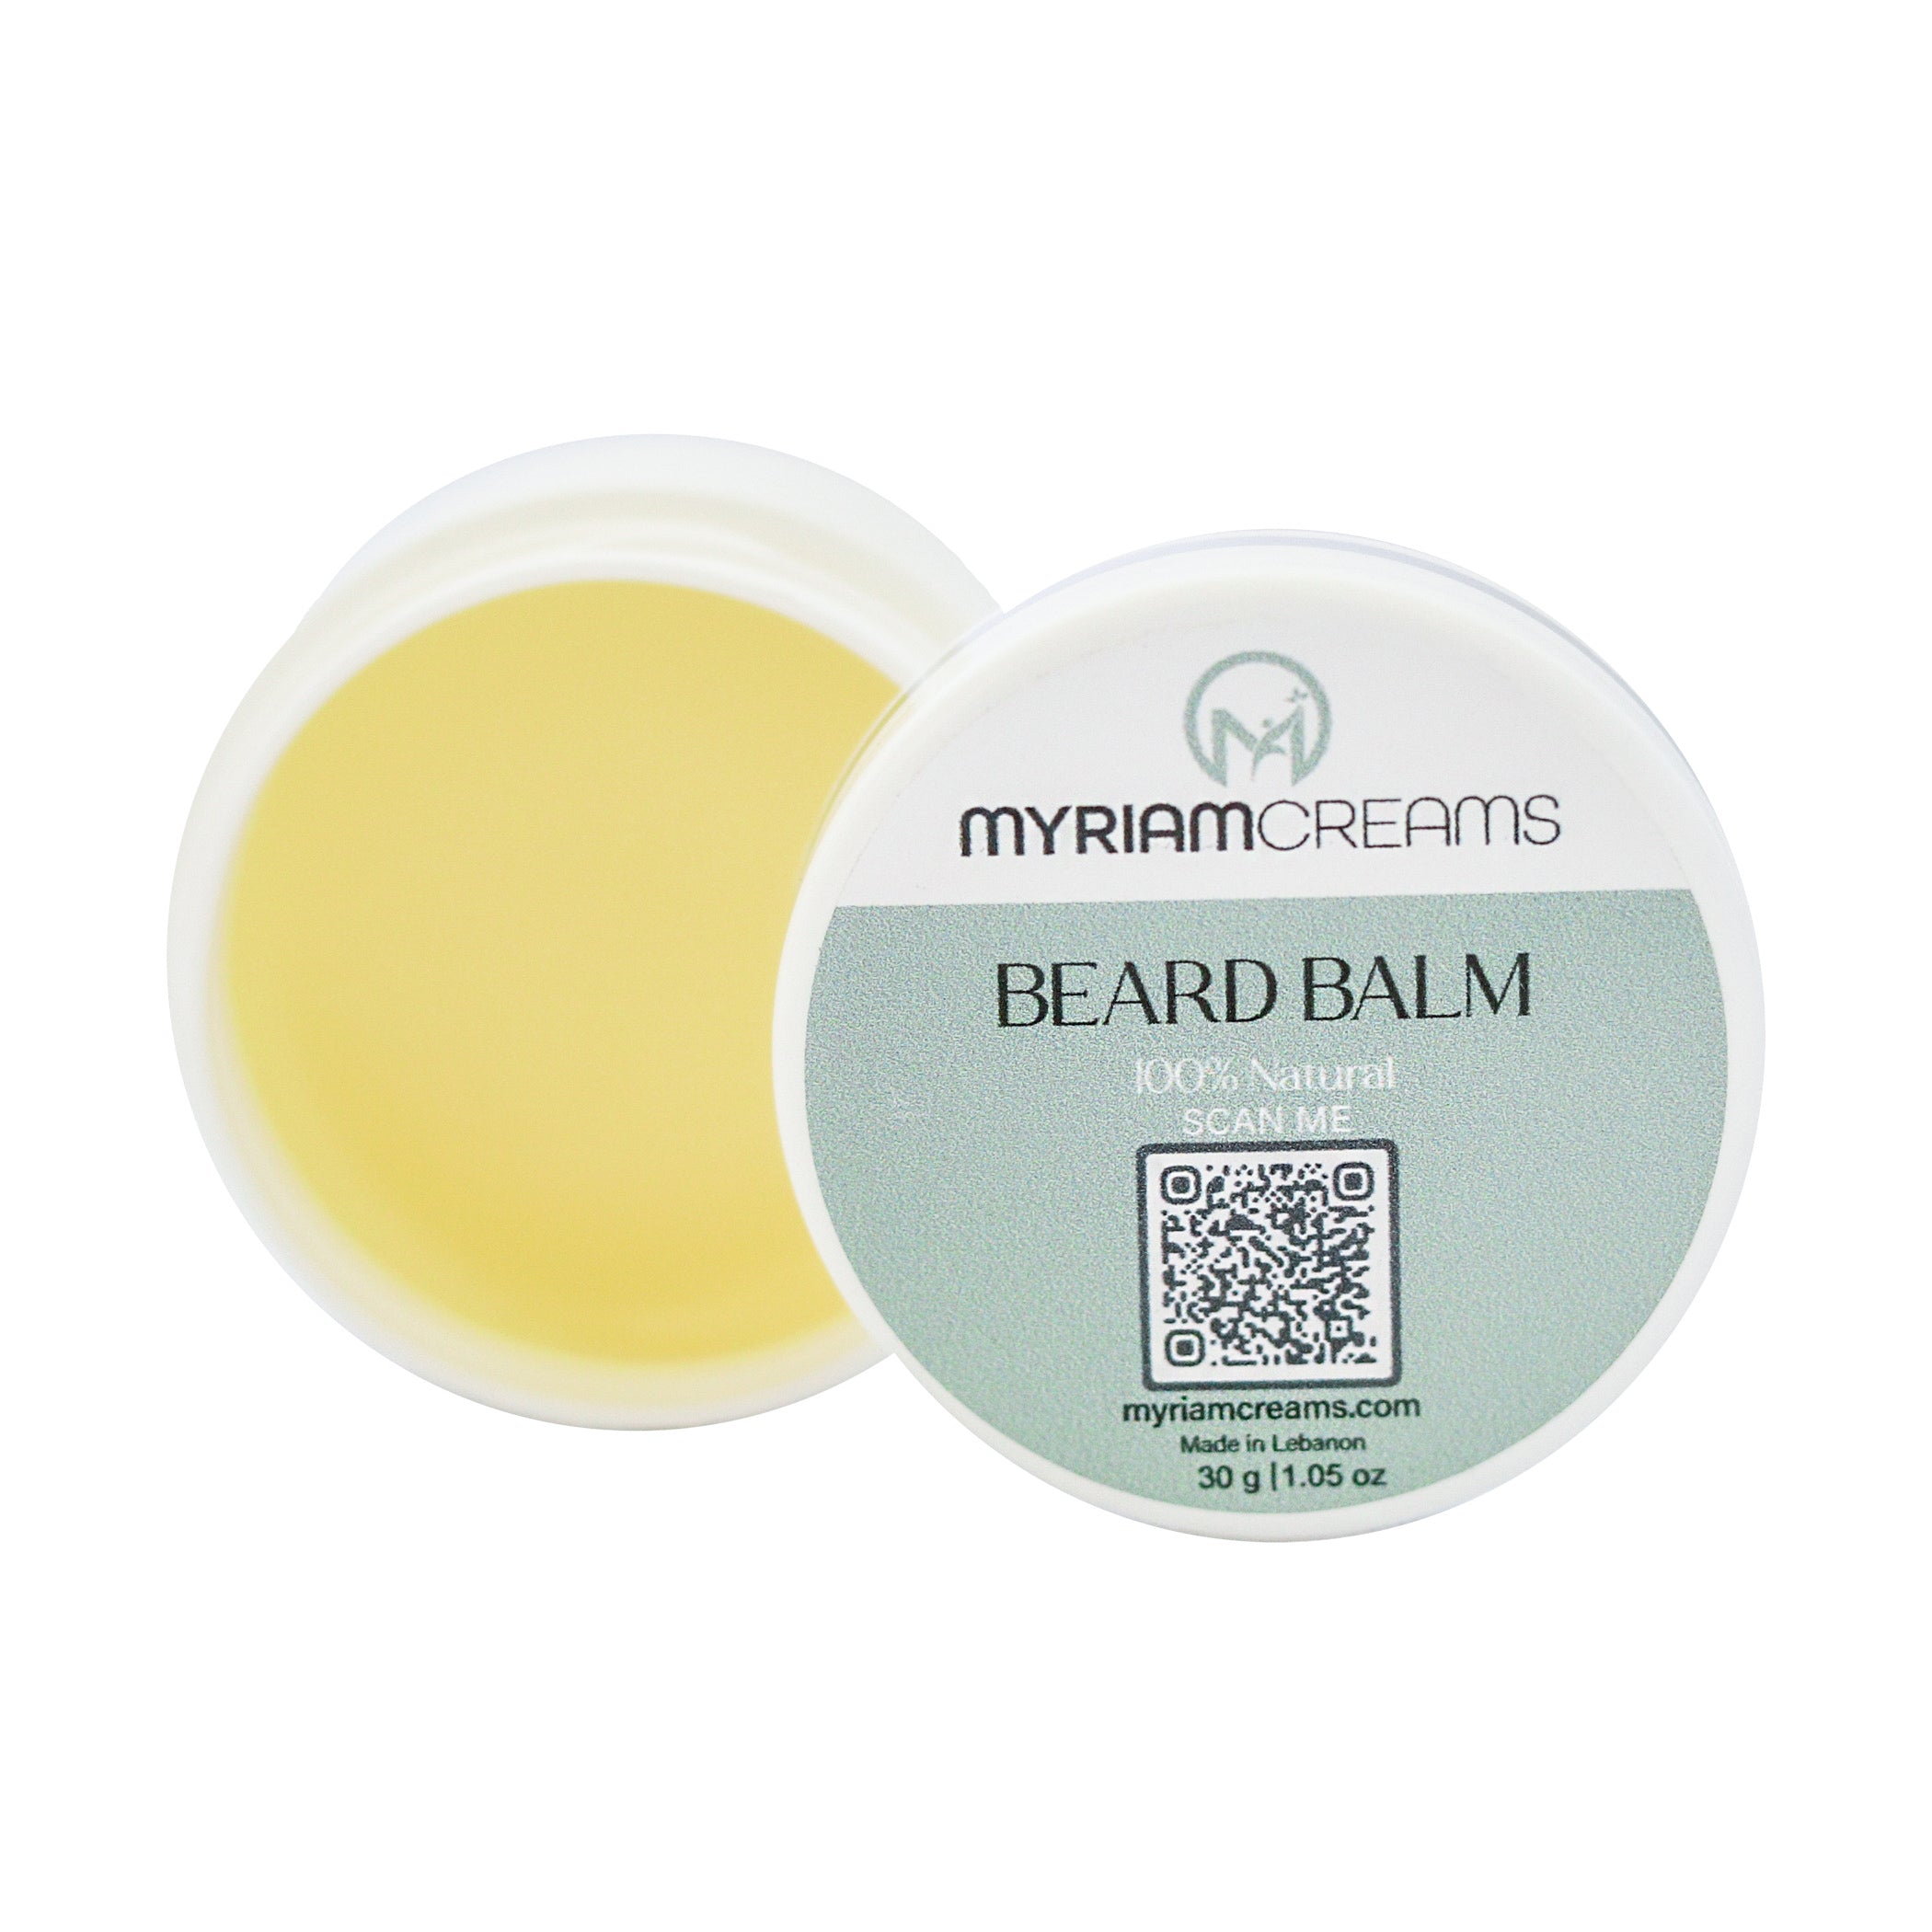 Men's Beauty products Lebanon, Beard products online – MYHOLDAL LEBANON